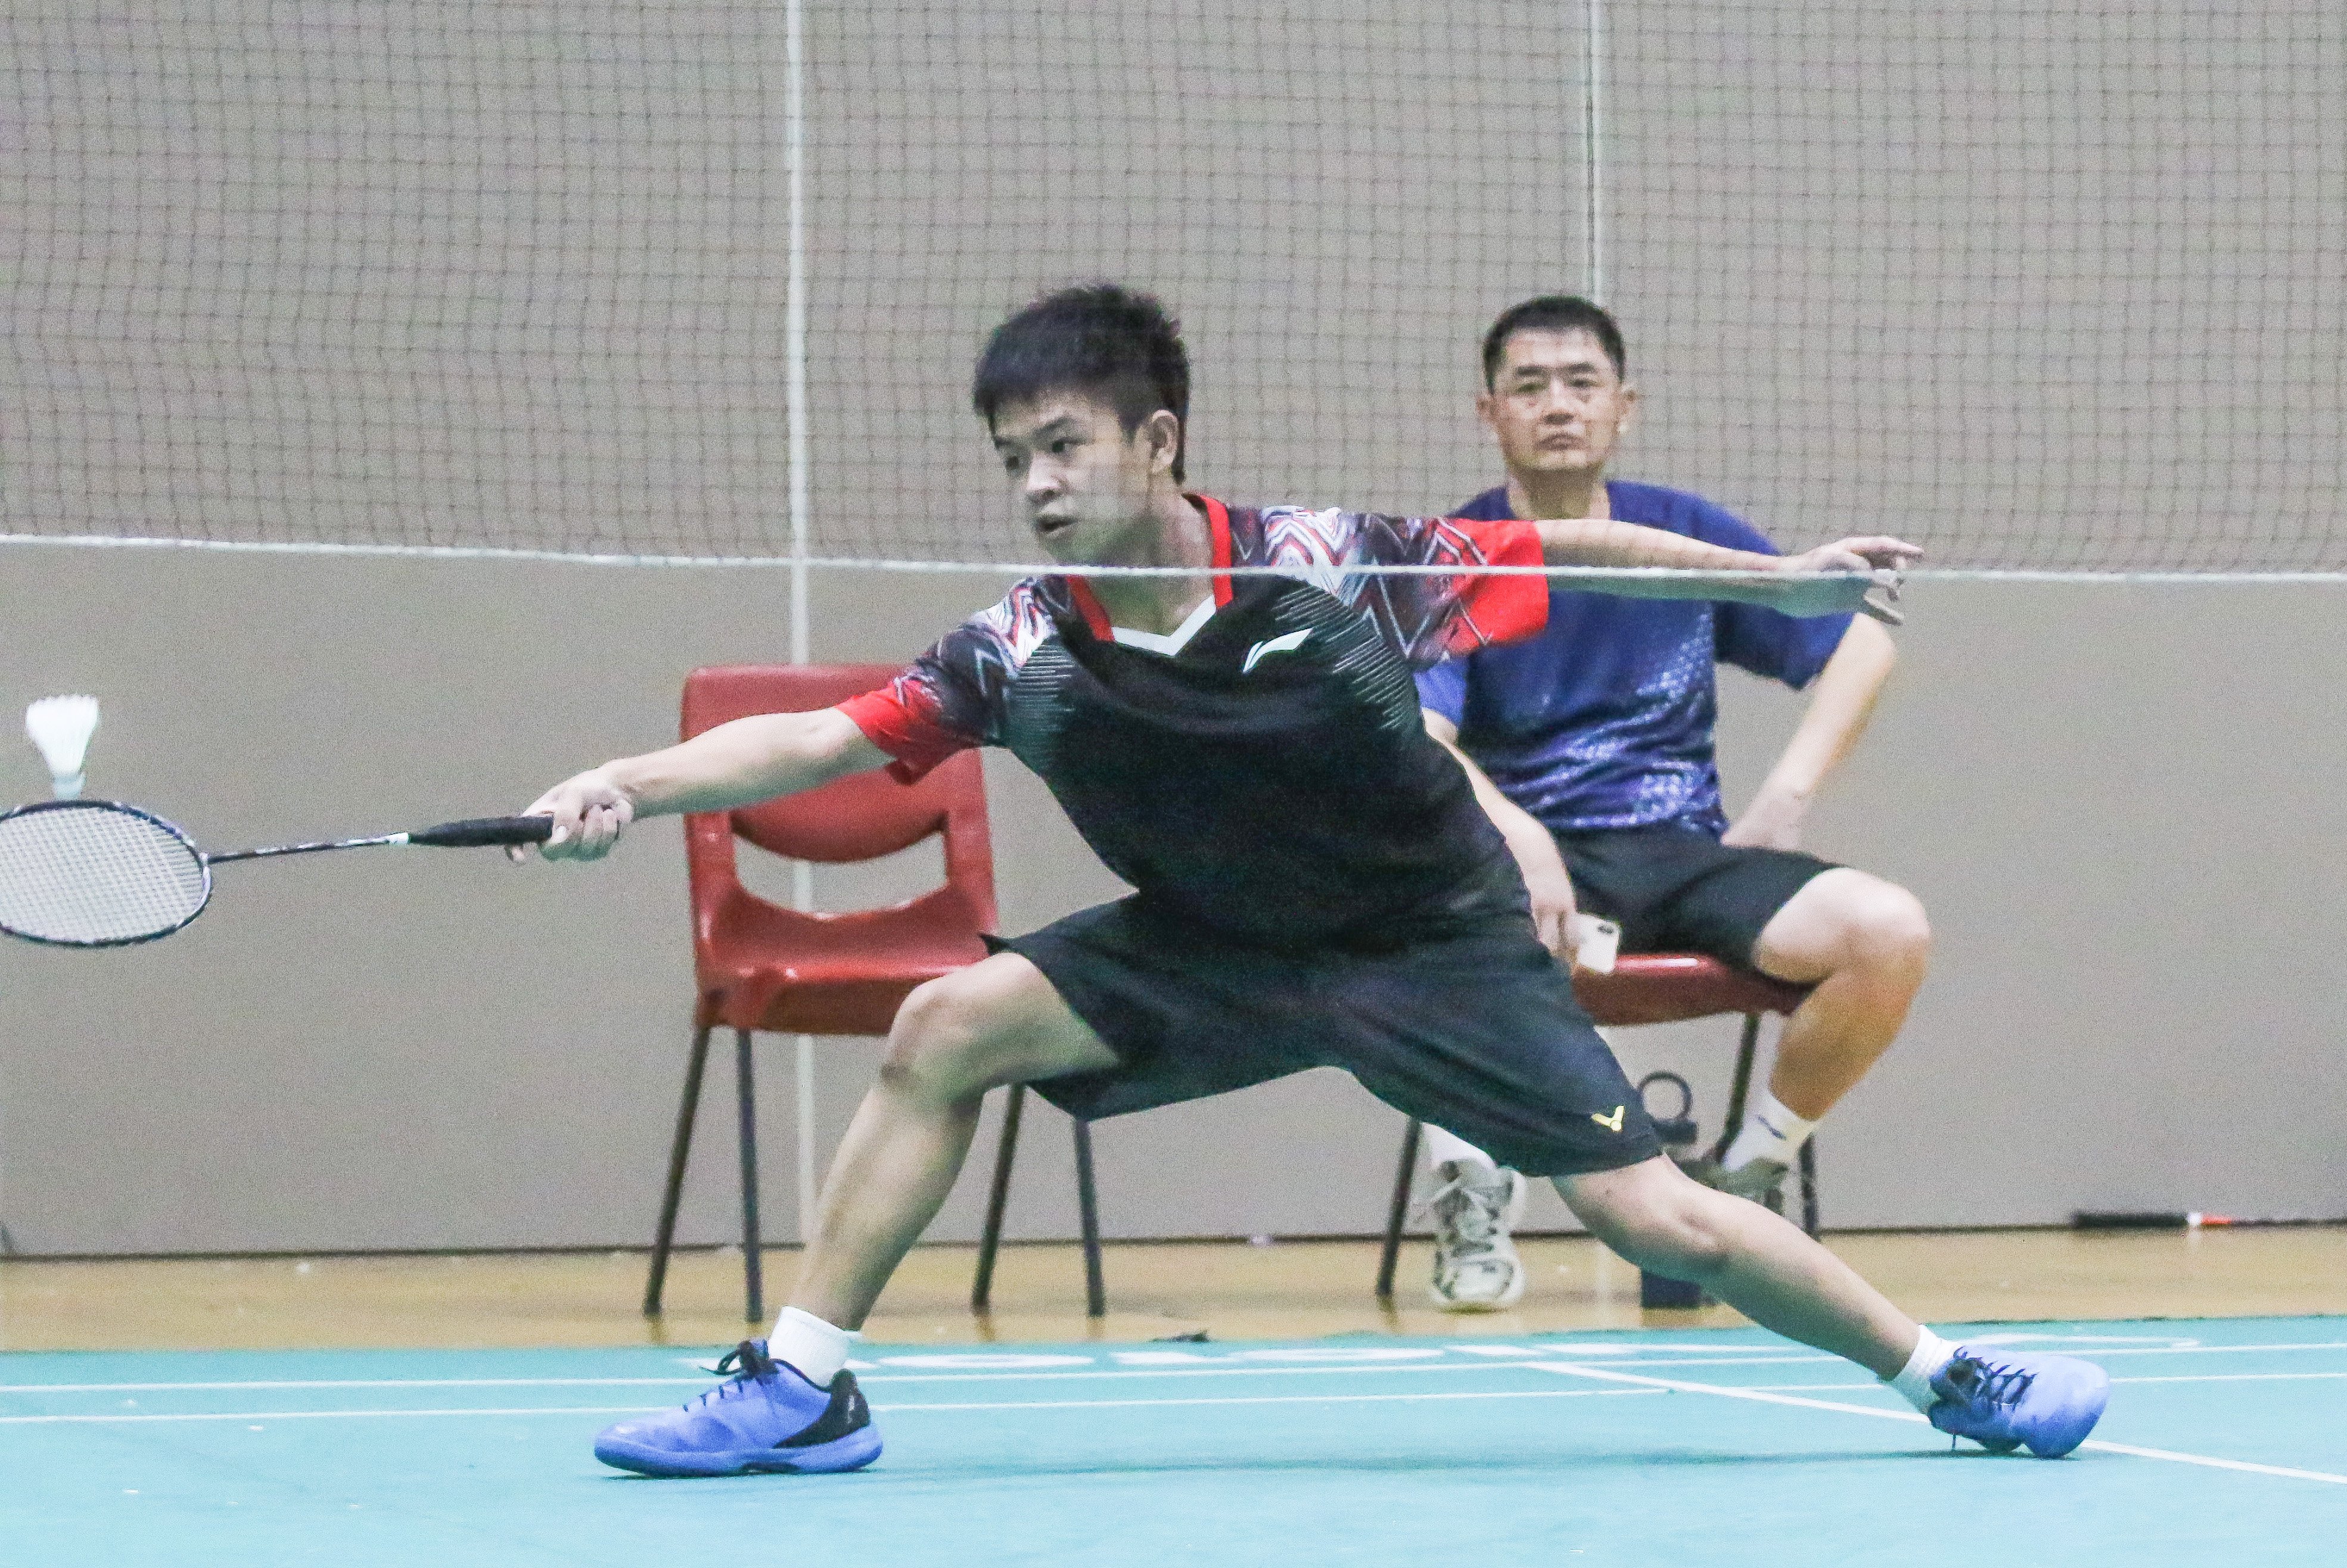 2023-05-17_Badminton_By Chin KK_IFP_1888_edited